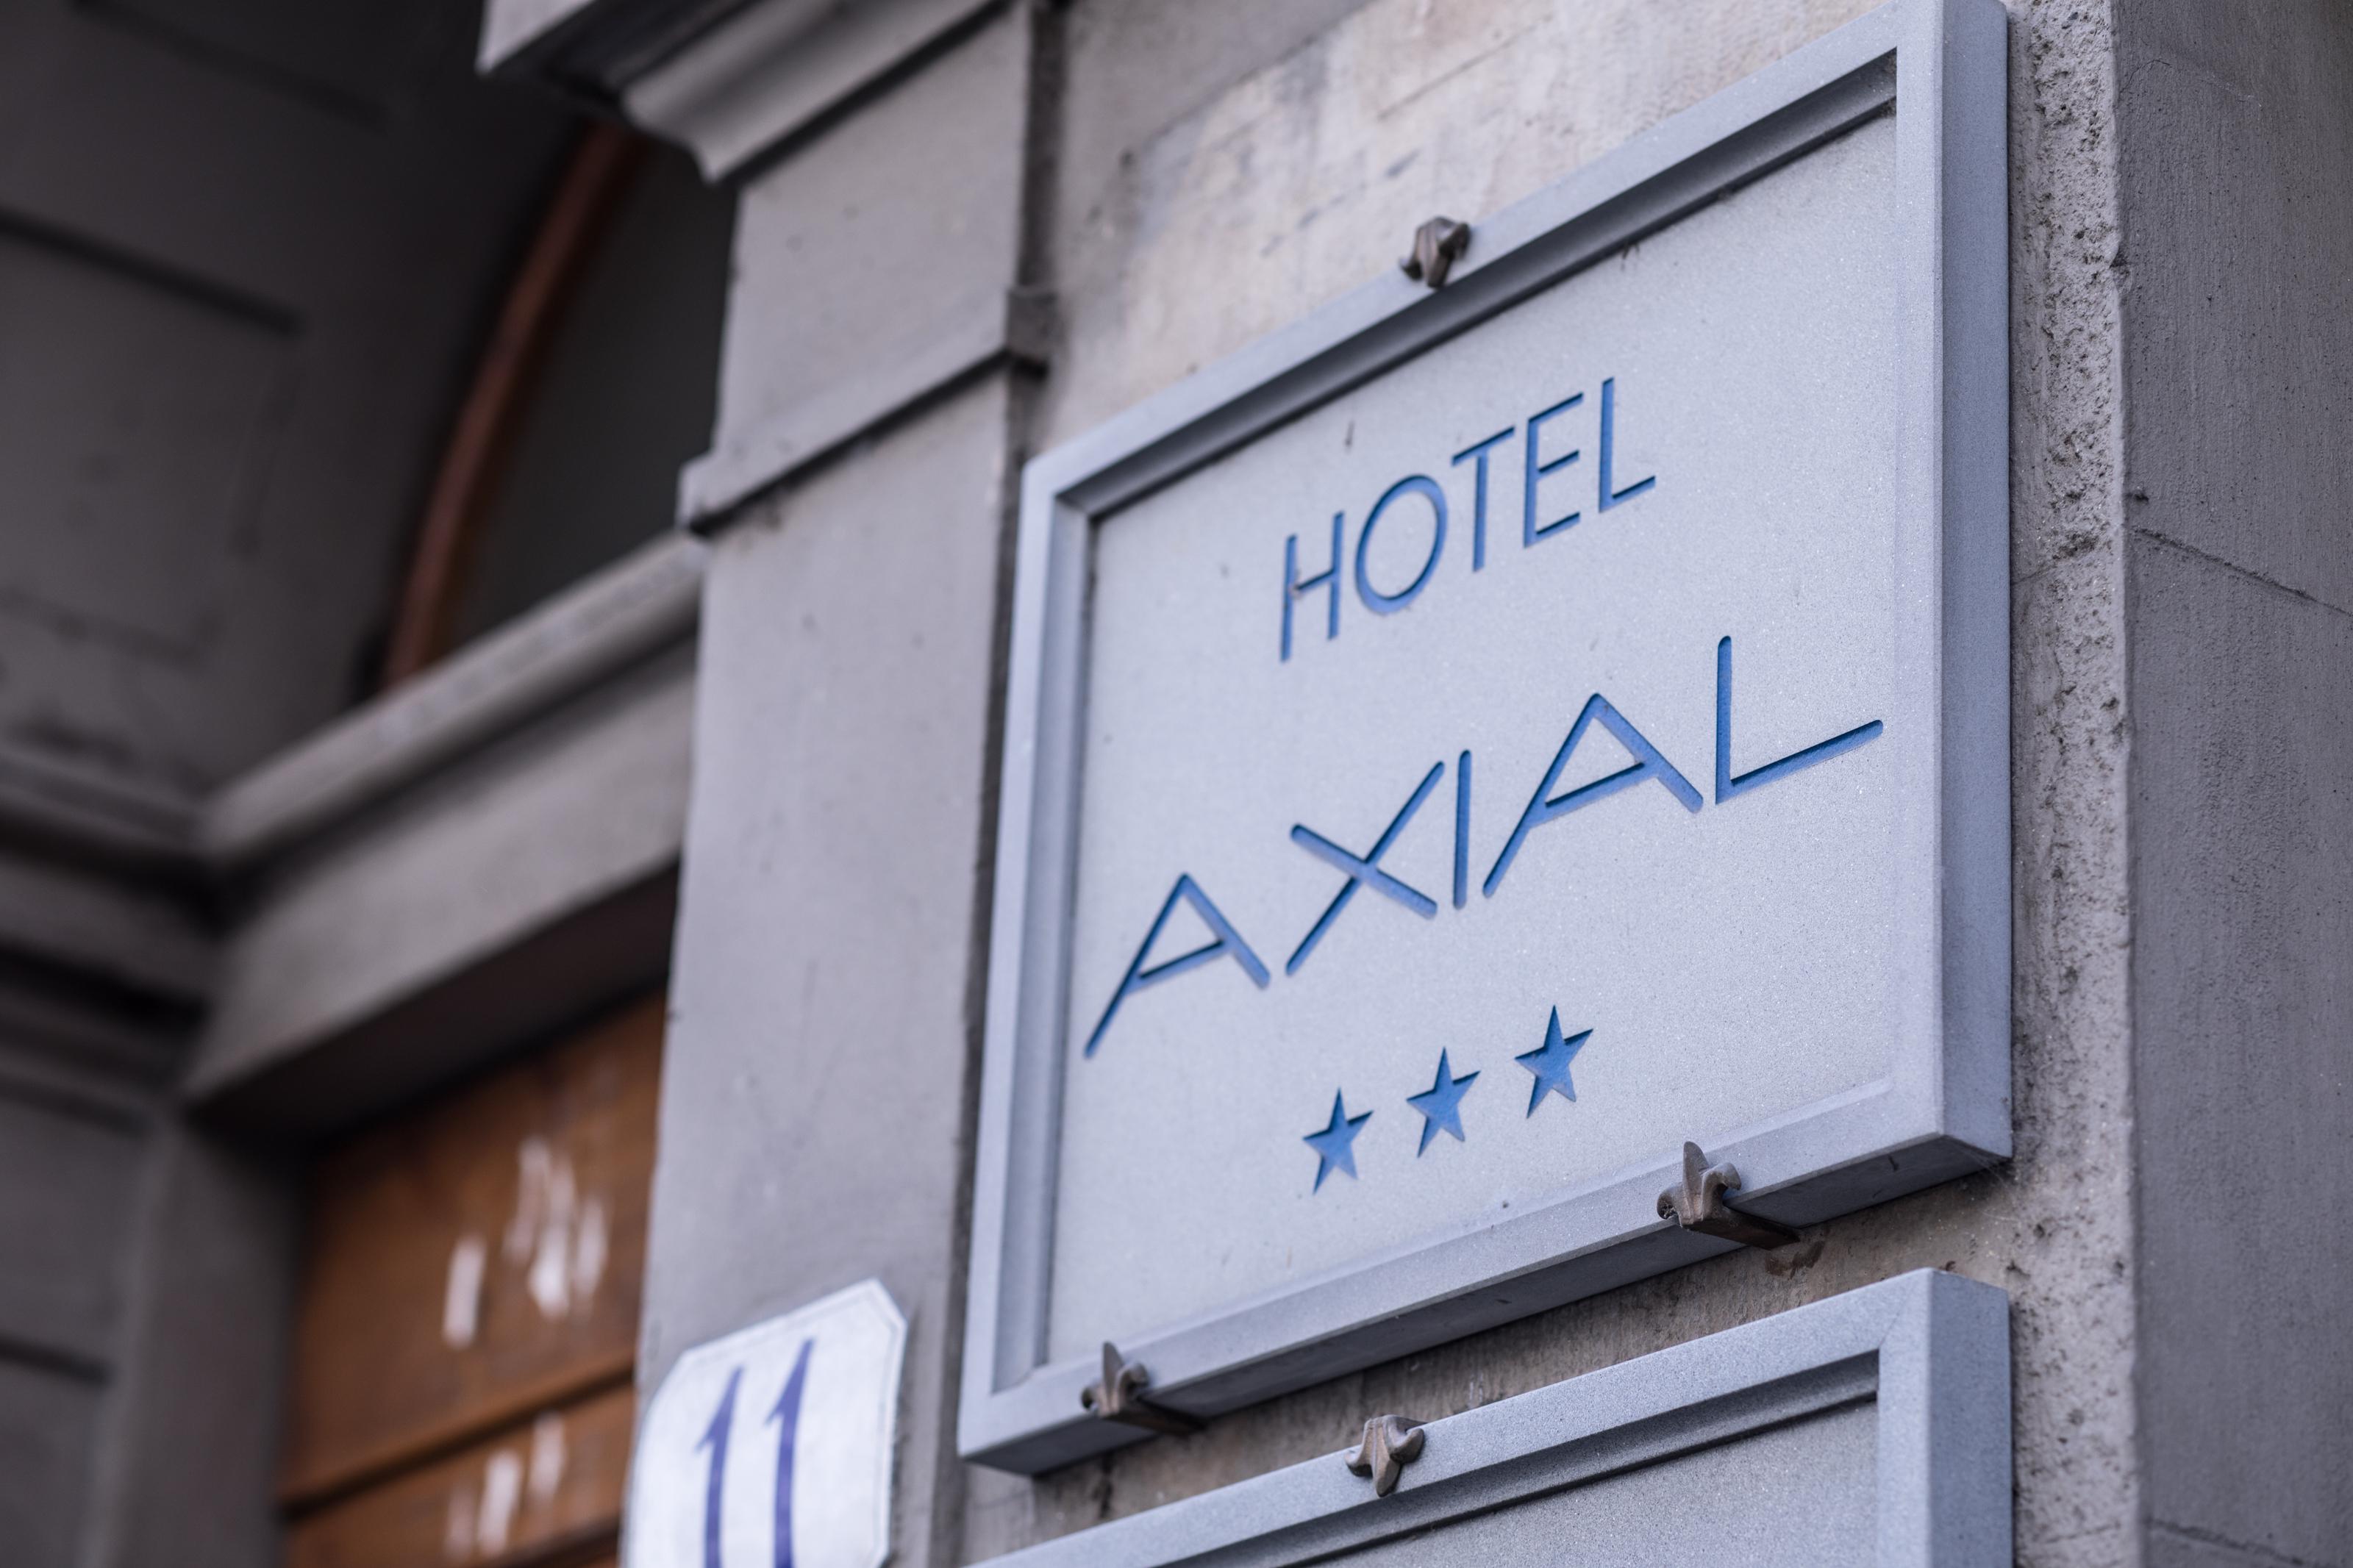 Hotel Maxim Axial Florence Exterior photo